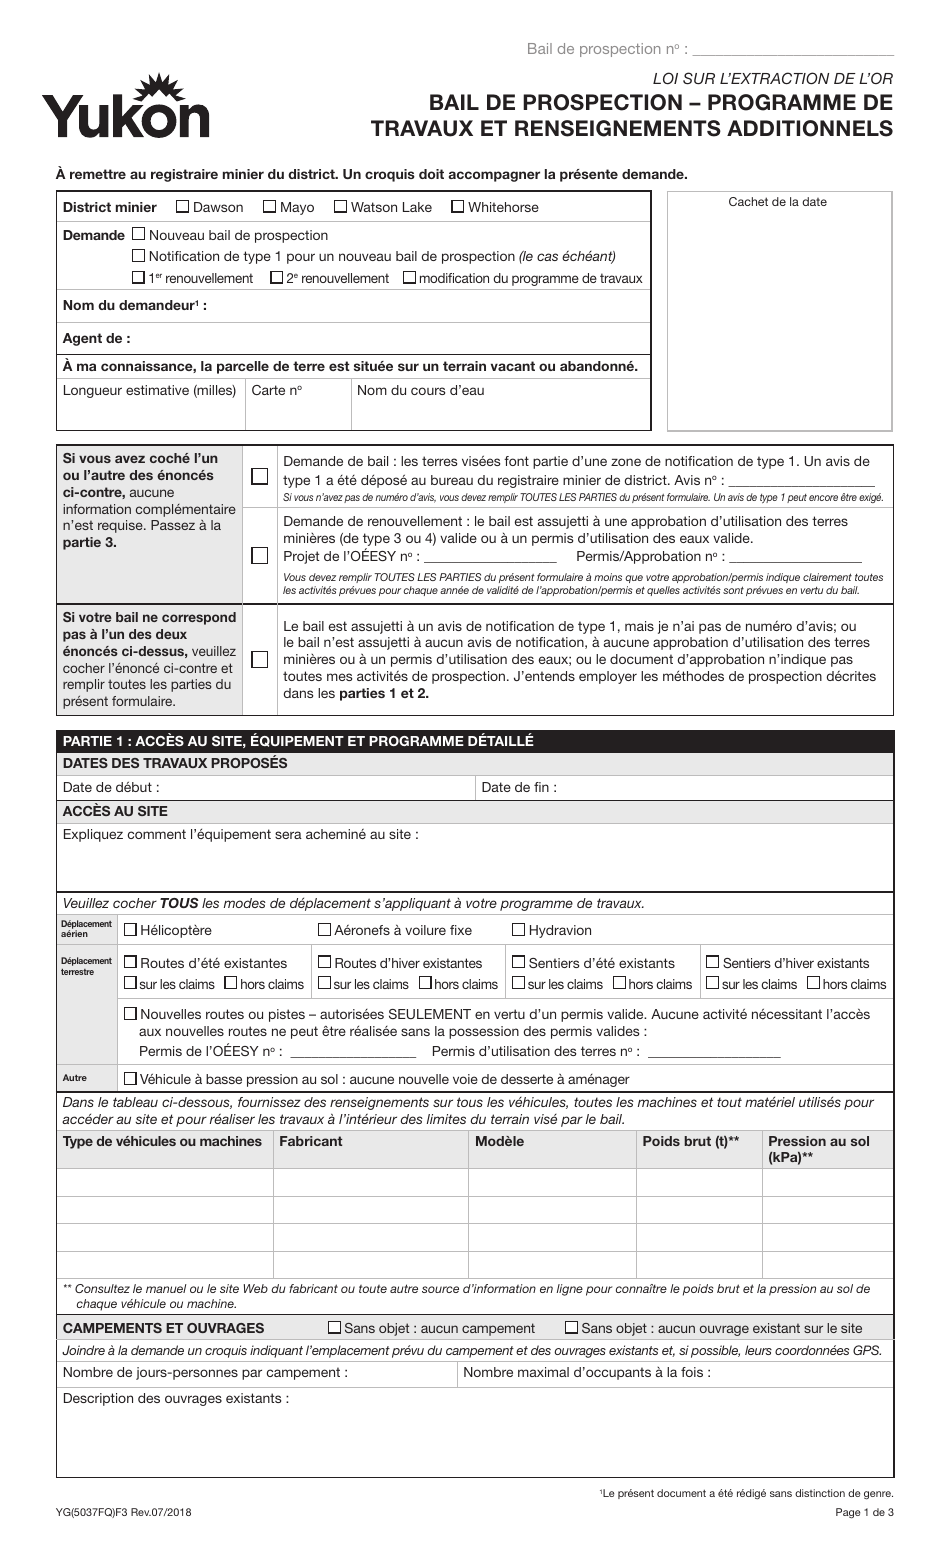 Forme YG5037 Bail De Prospection - Programme De Travaux Et Renseignements Additionnels - Yukon, Canada (French), Page 1